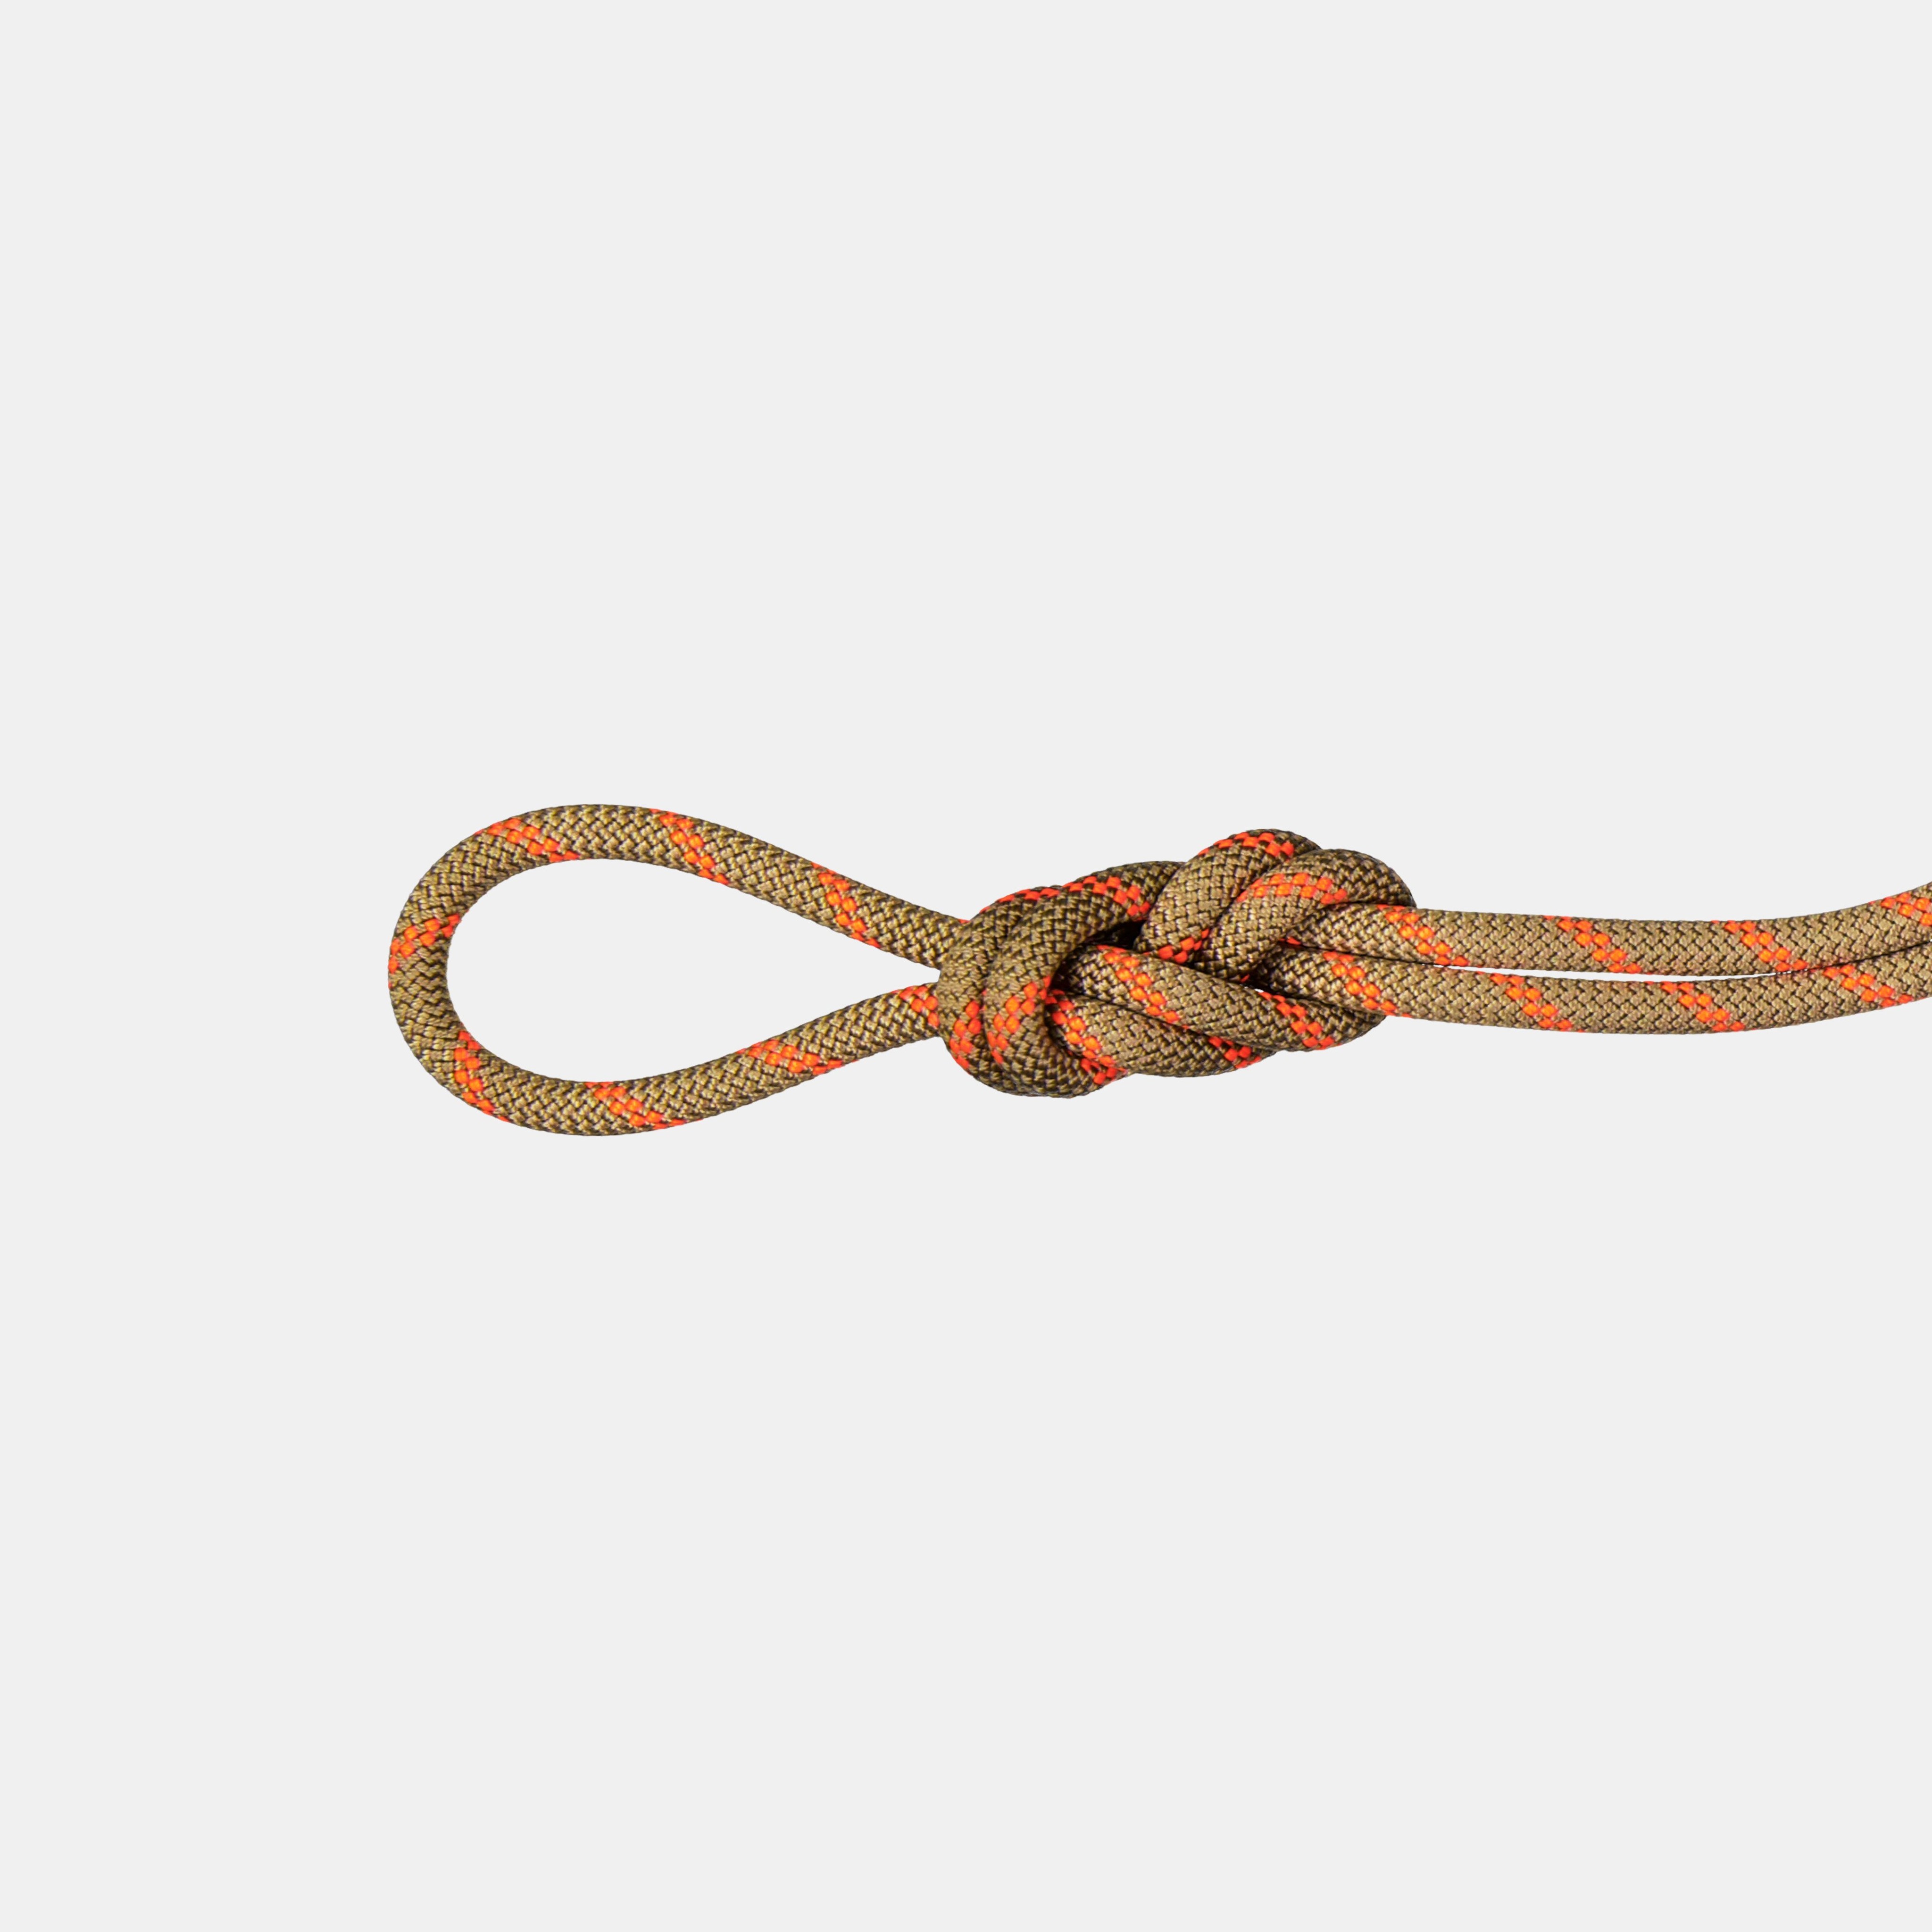 8.0 Alpine Dry Rope product image